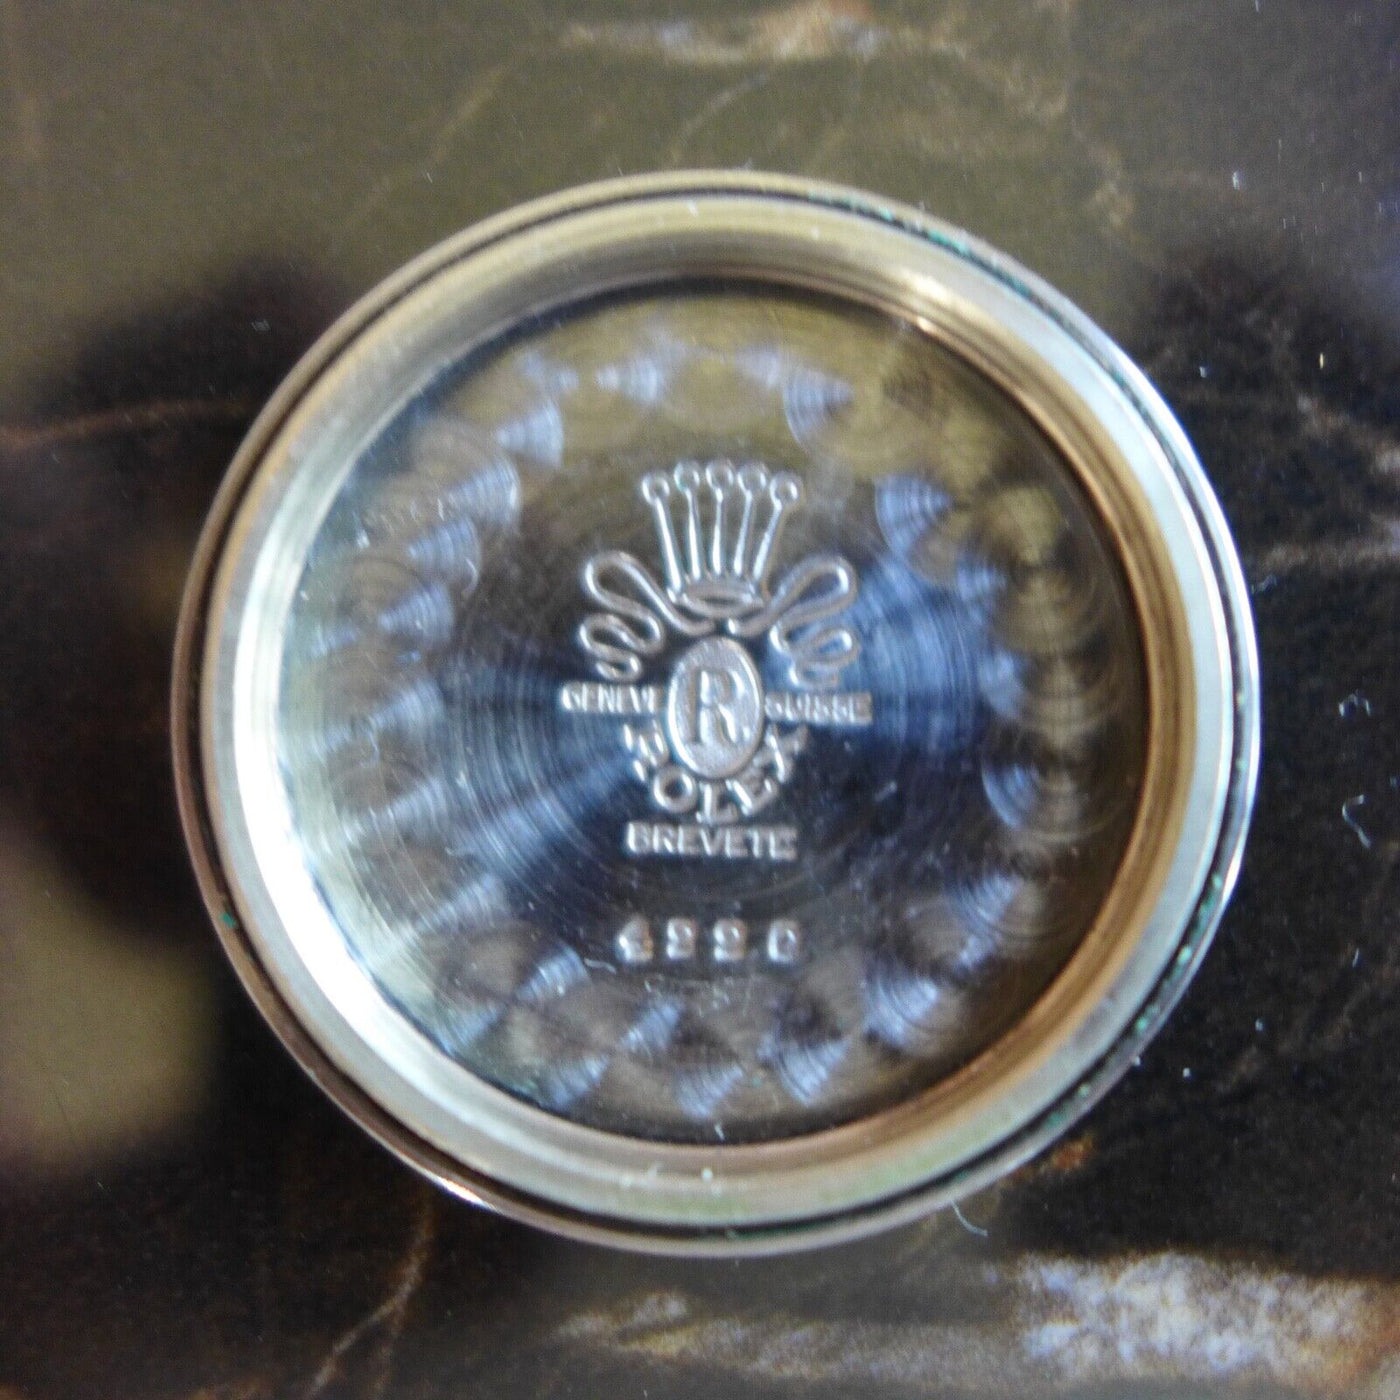 Vintage Rolex Precision Watch Oyster Speed ​​King ref. 4220 1946